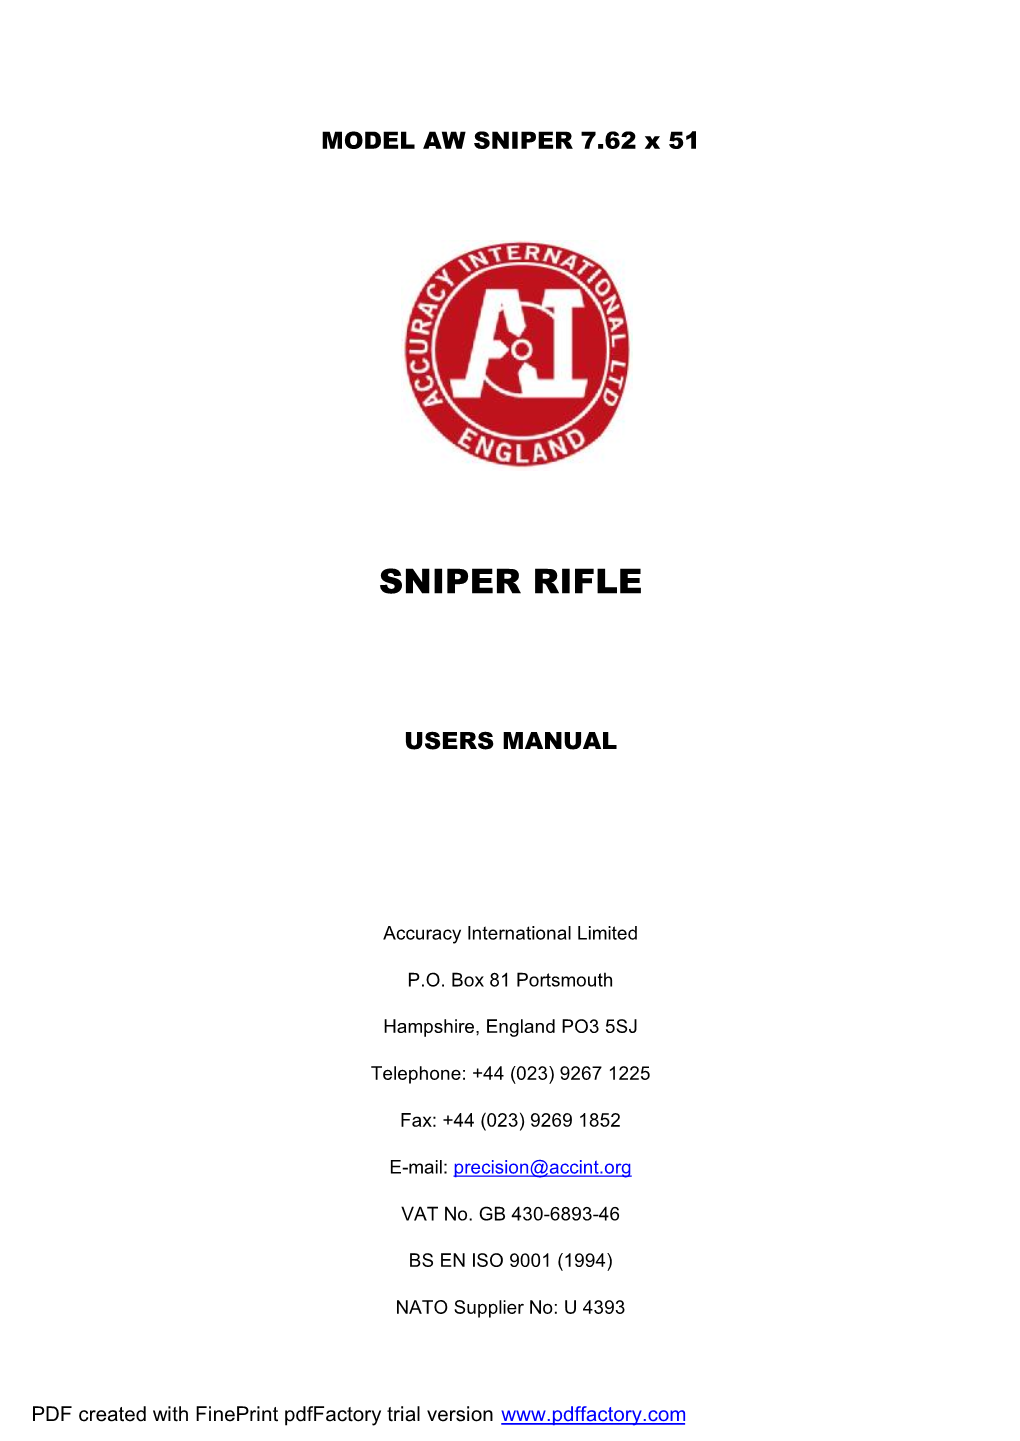 Accuracy International AW Sniper Manual